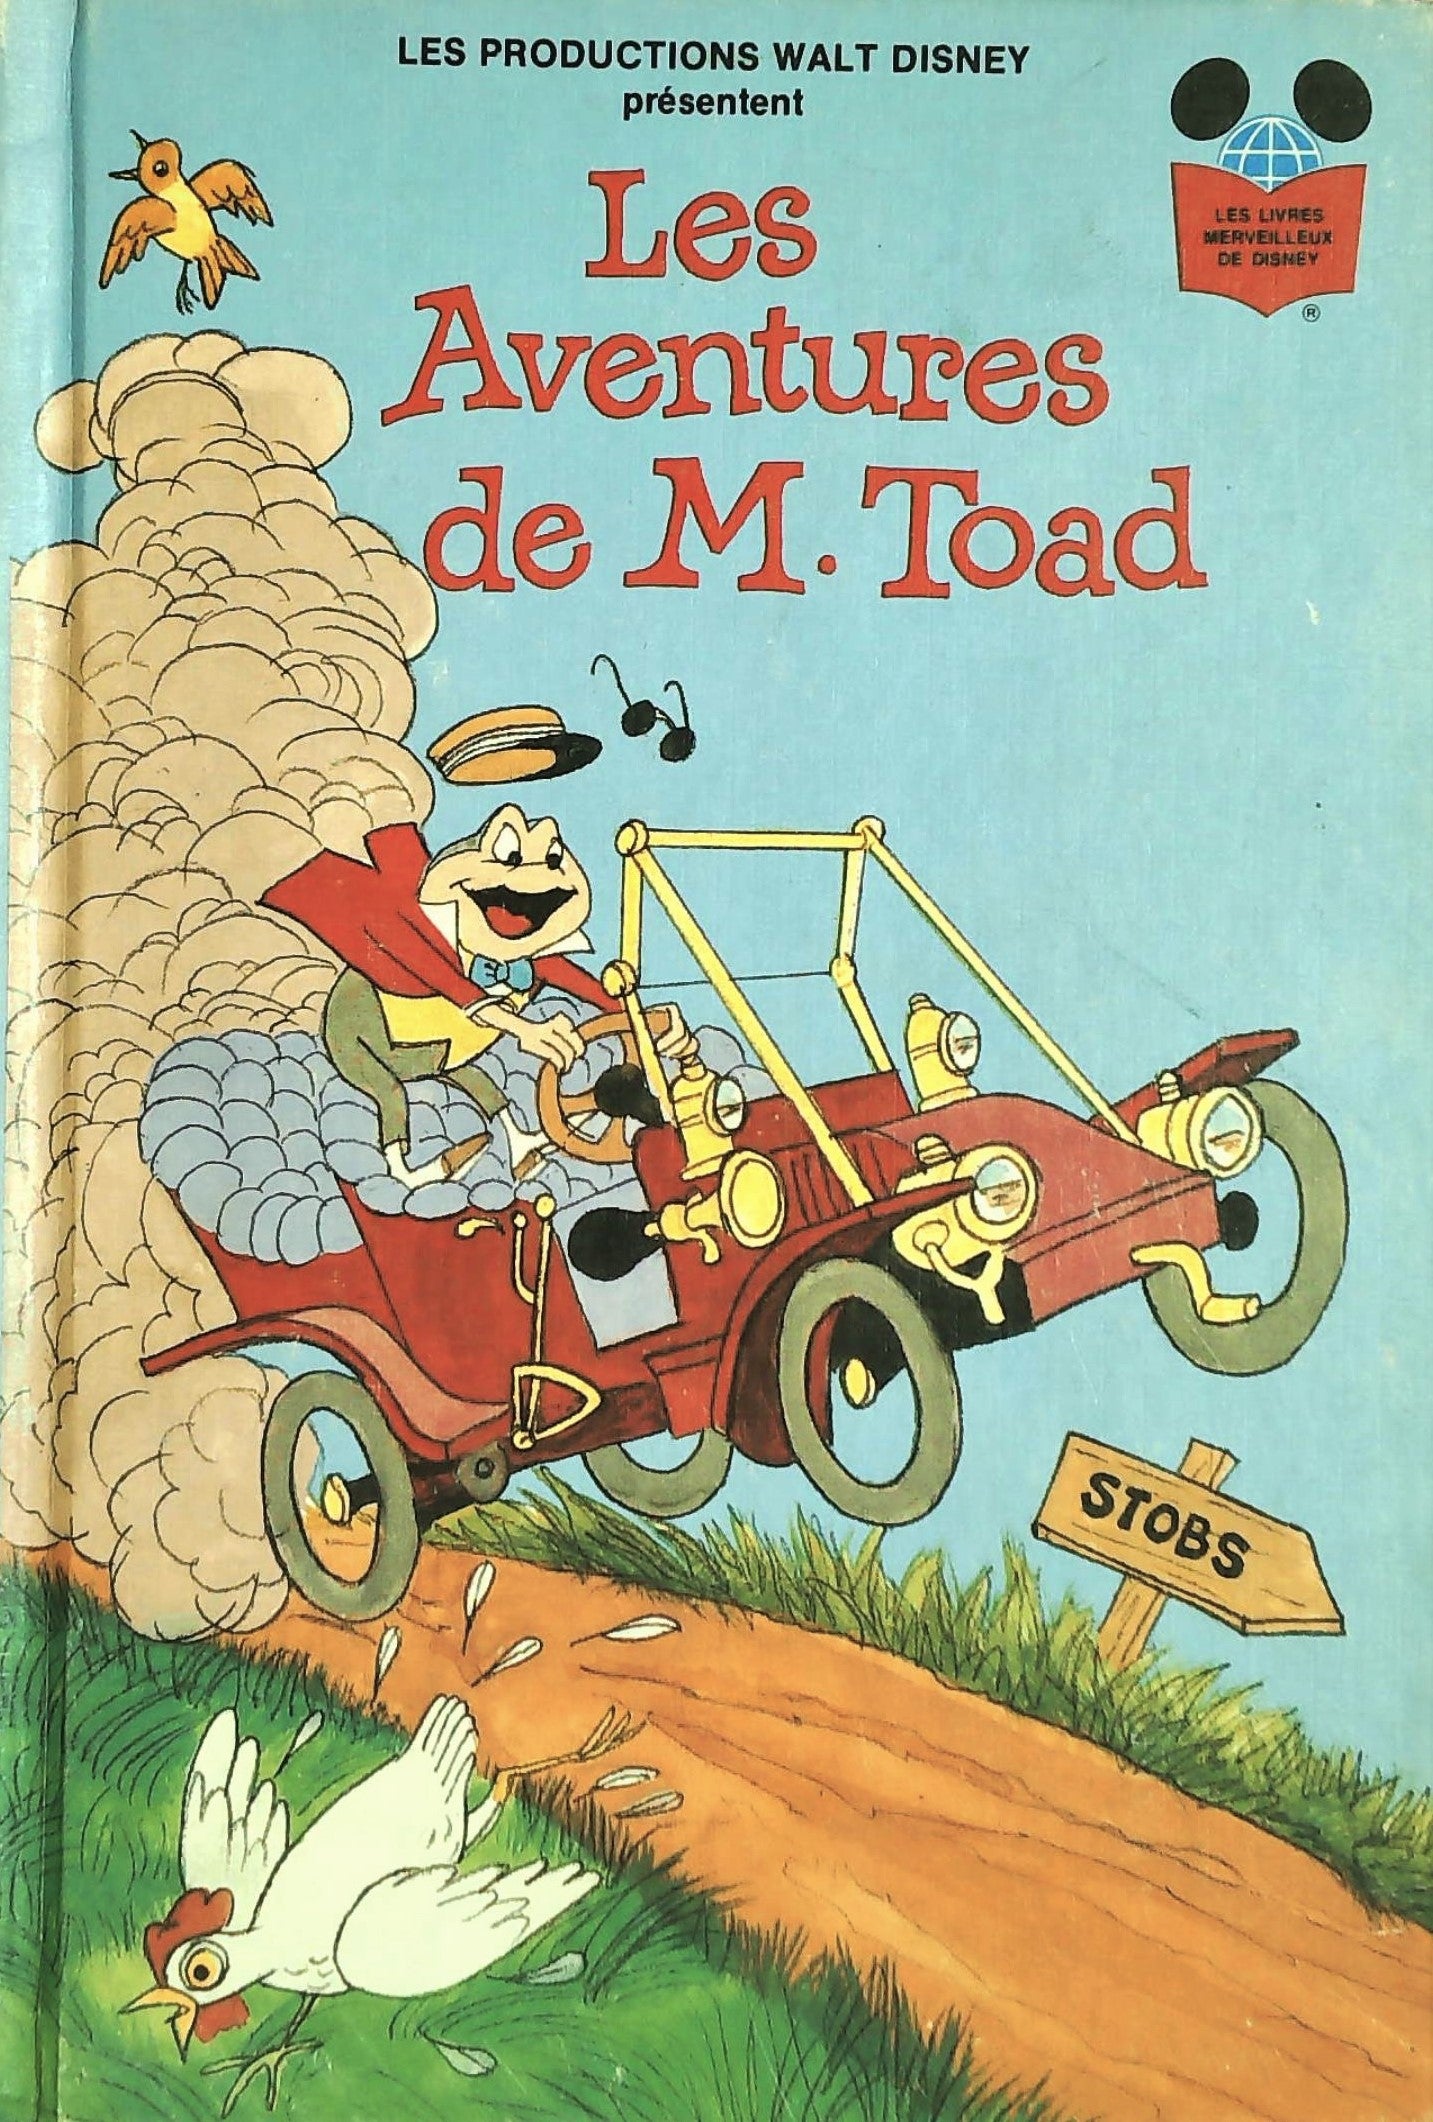 Les livres merveilleux de Disney : Les aventures de M.Toad